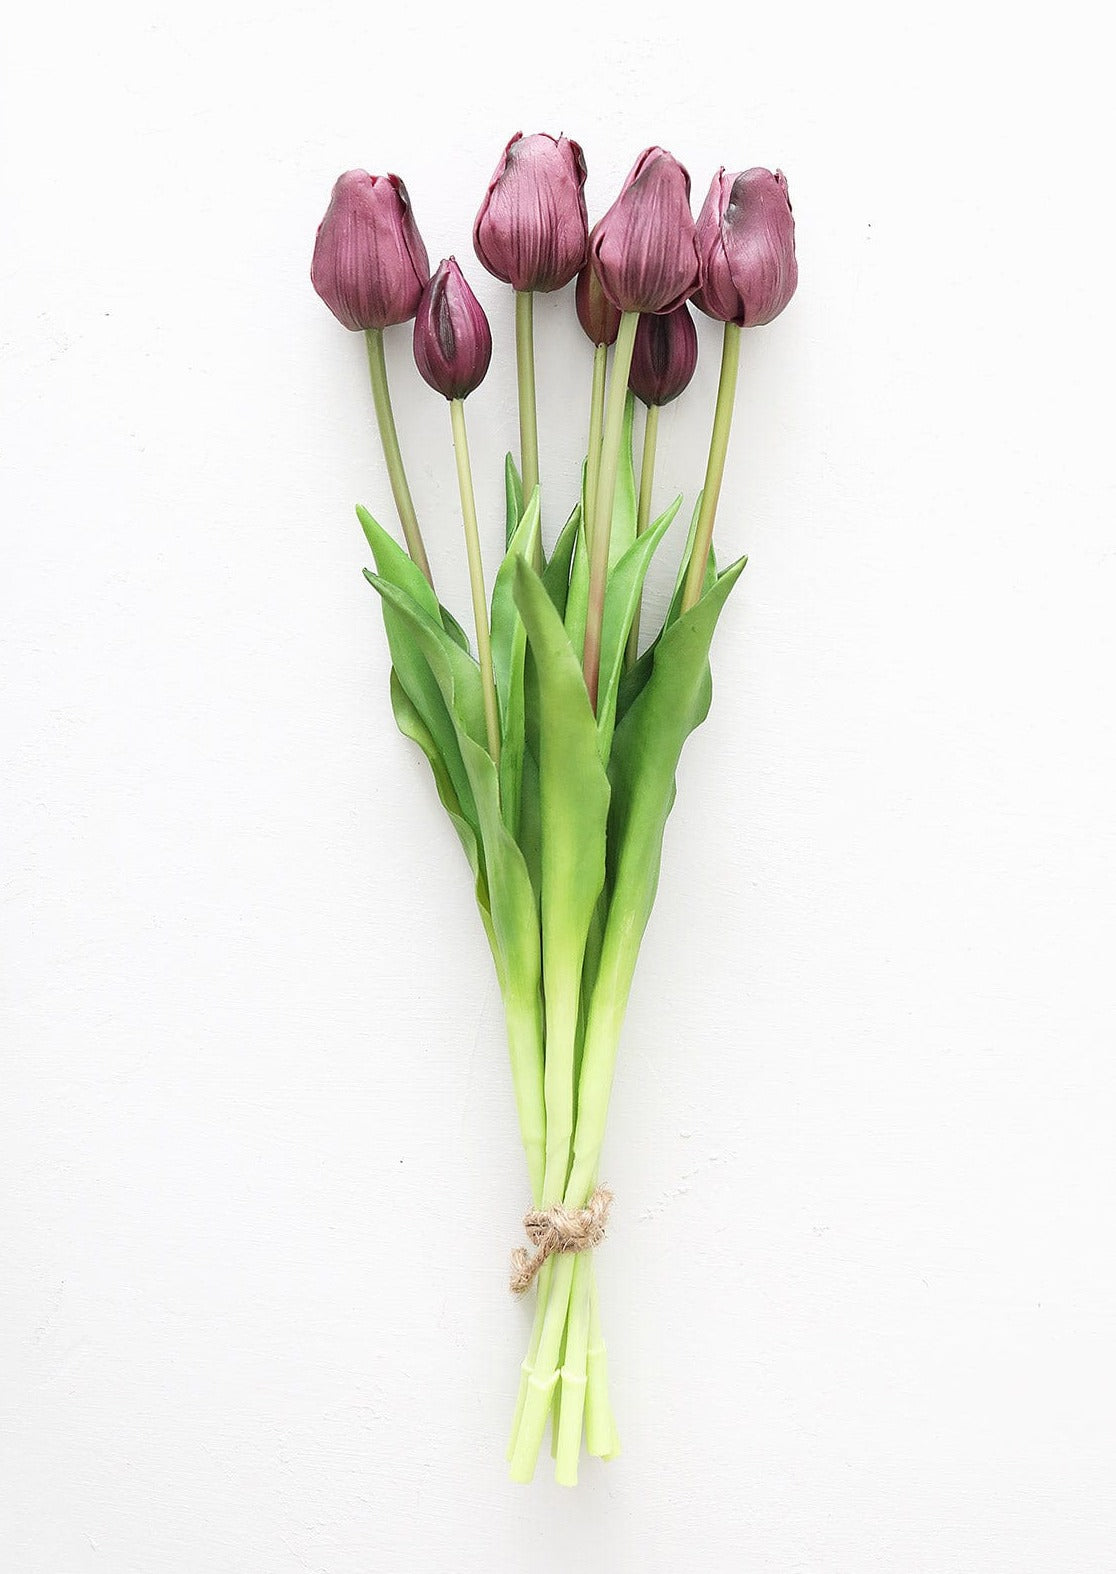 Festive Tulips Pop Up Bouquet